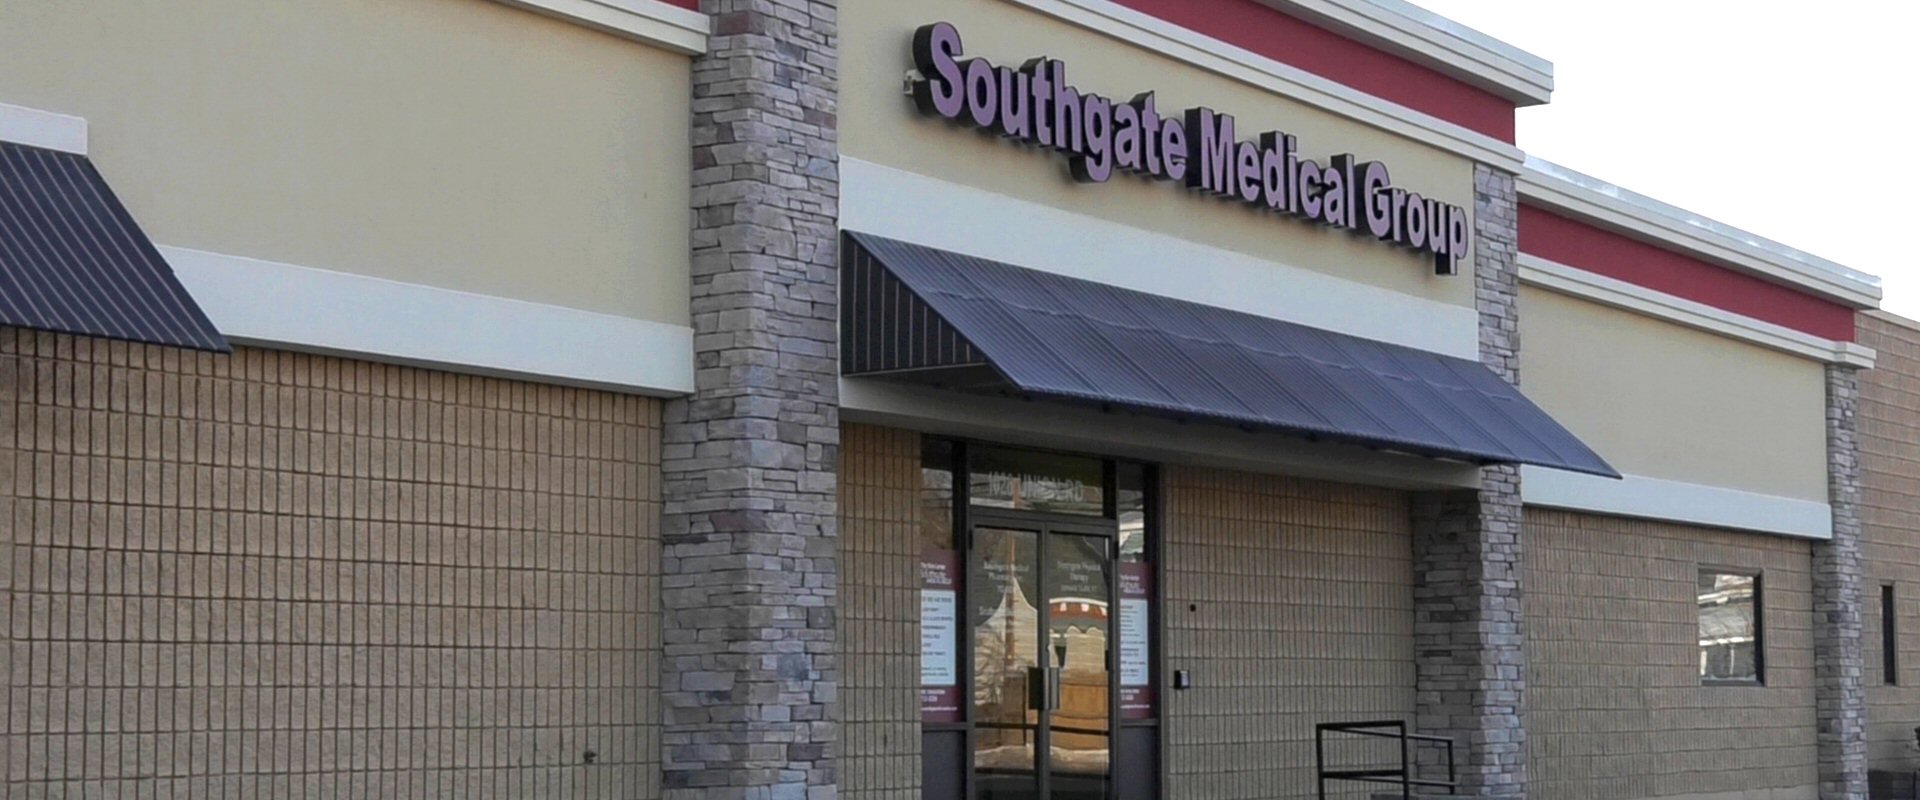 Southgate Medical Group